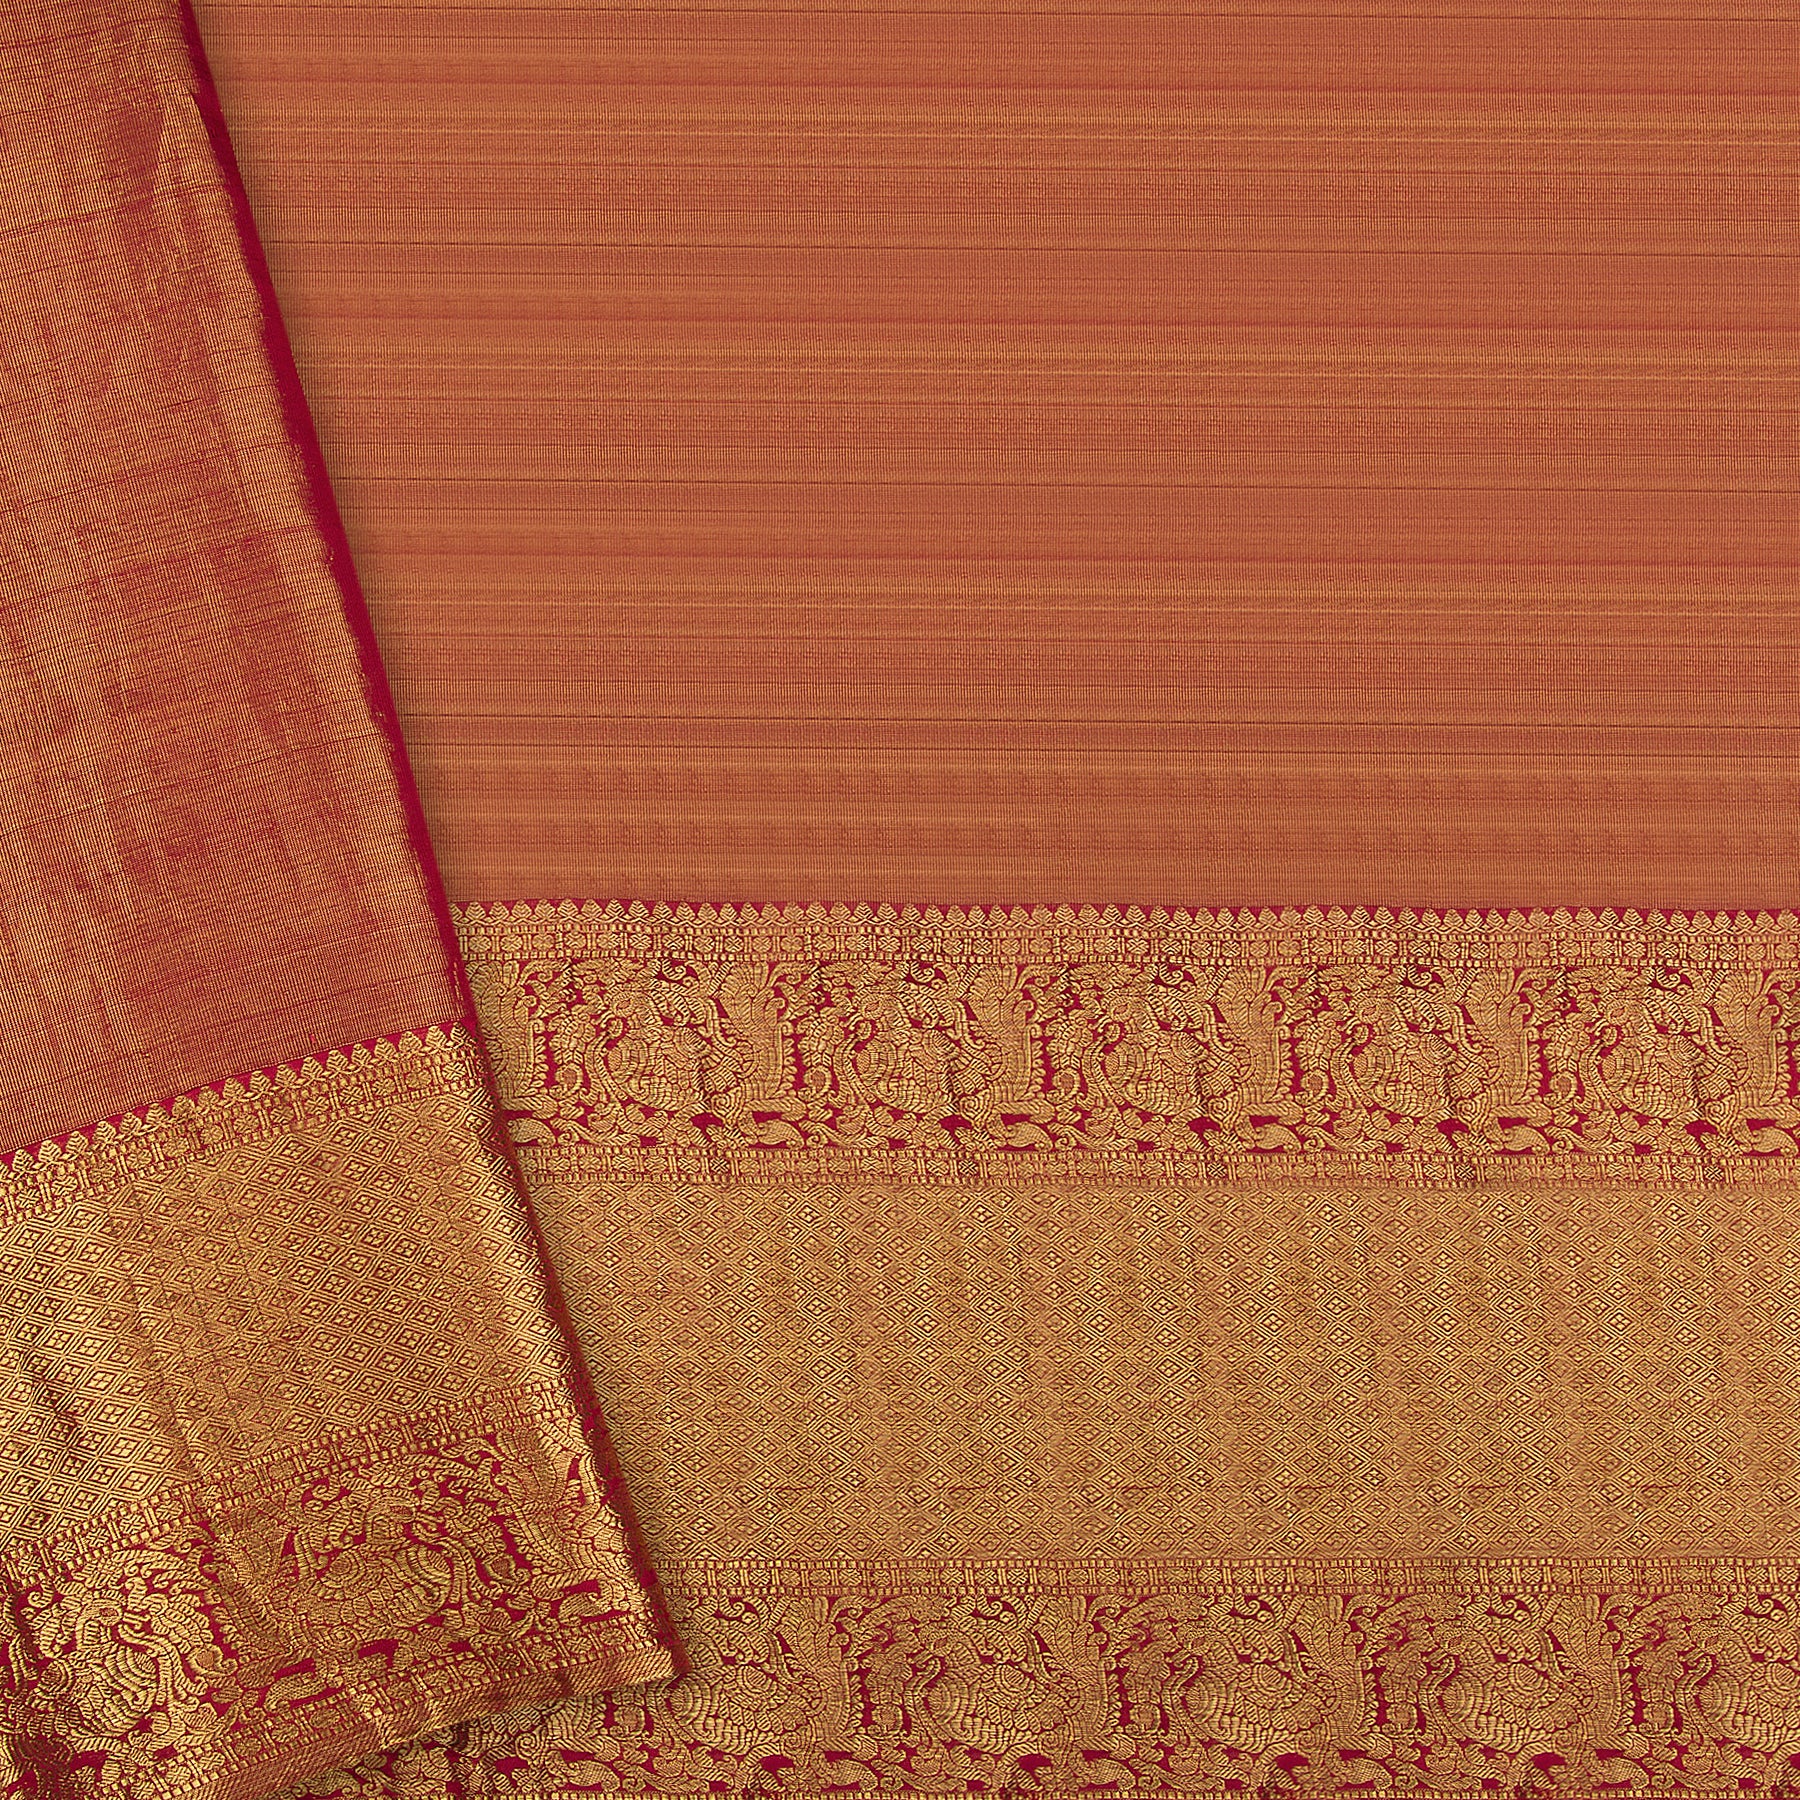 Kanakavalli Kanjivaram Silk Sari 21-100-HS001-03180 - Blouse View